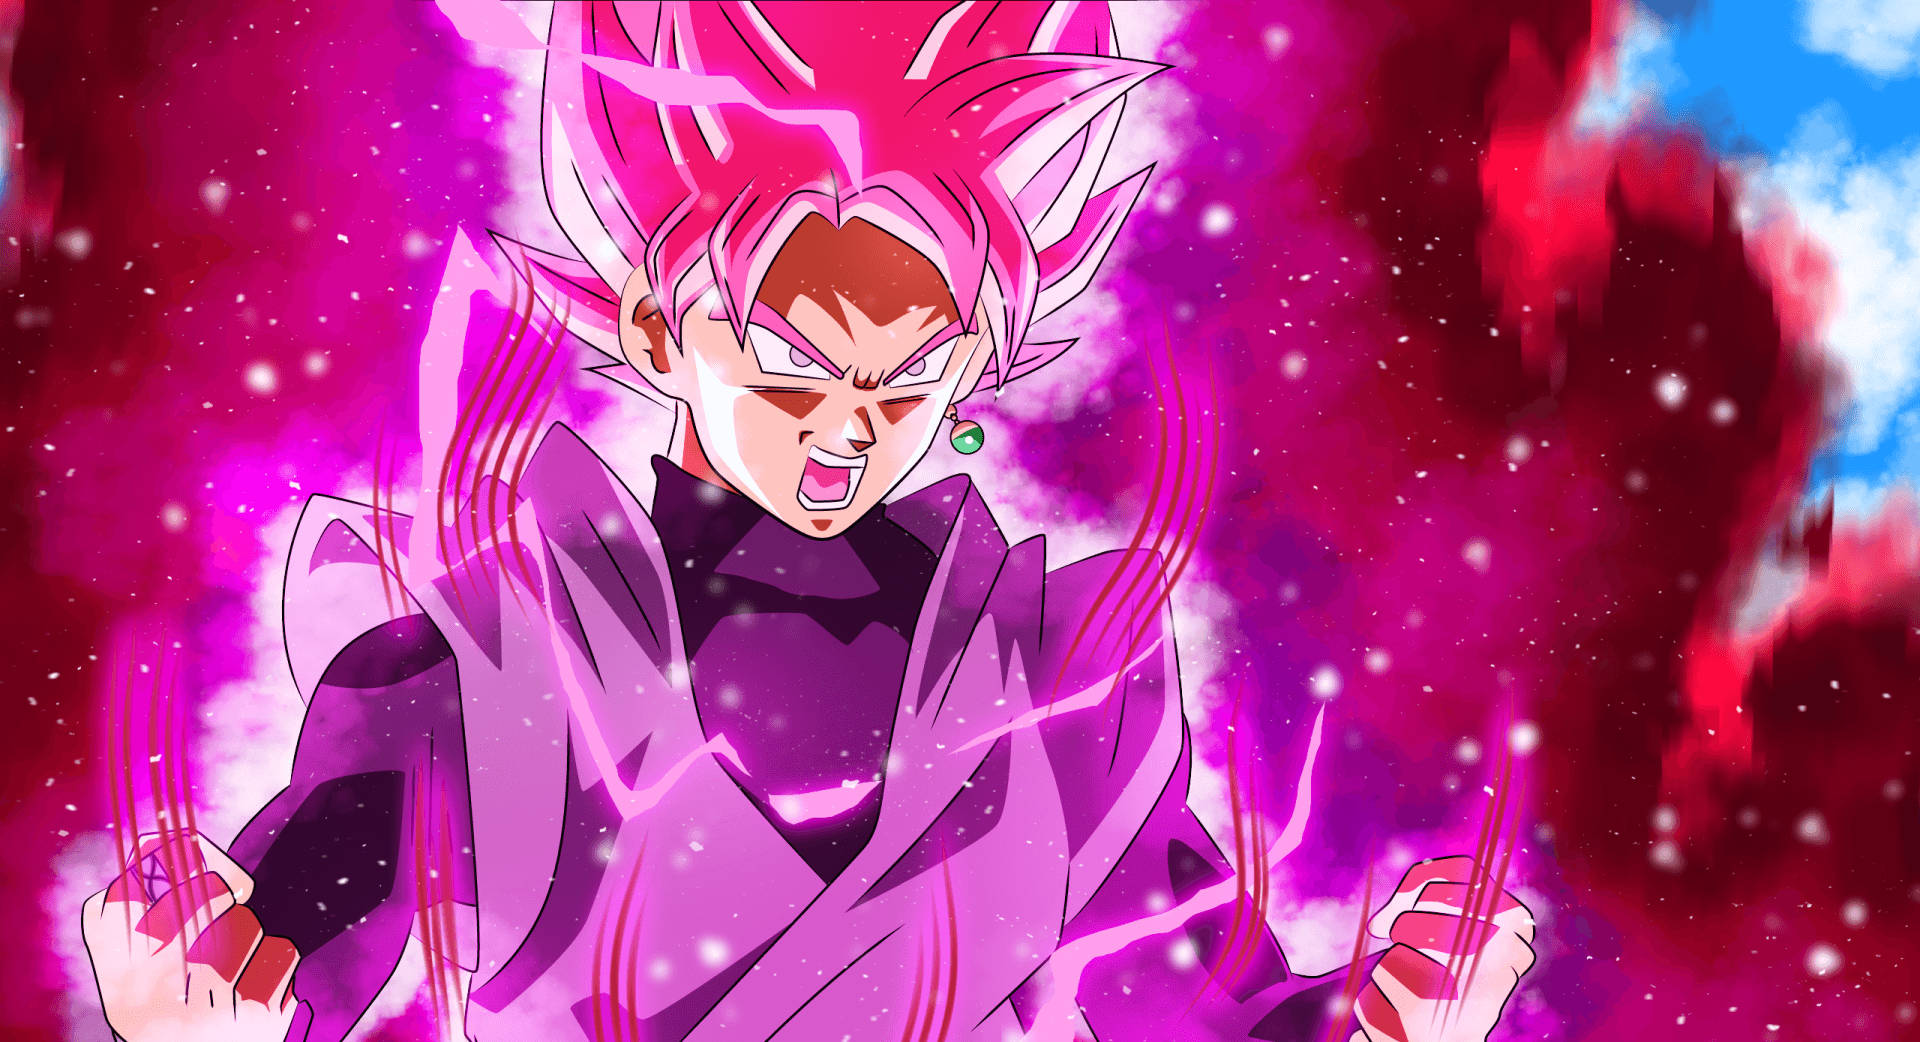 Black Goku pink hair battle damaged by THEDATAGRAPHICS on DeviantArt